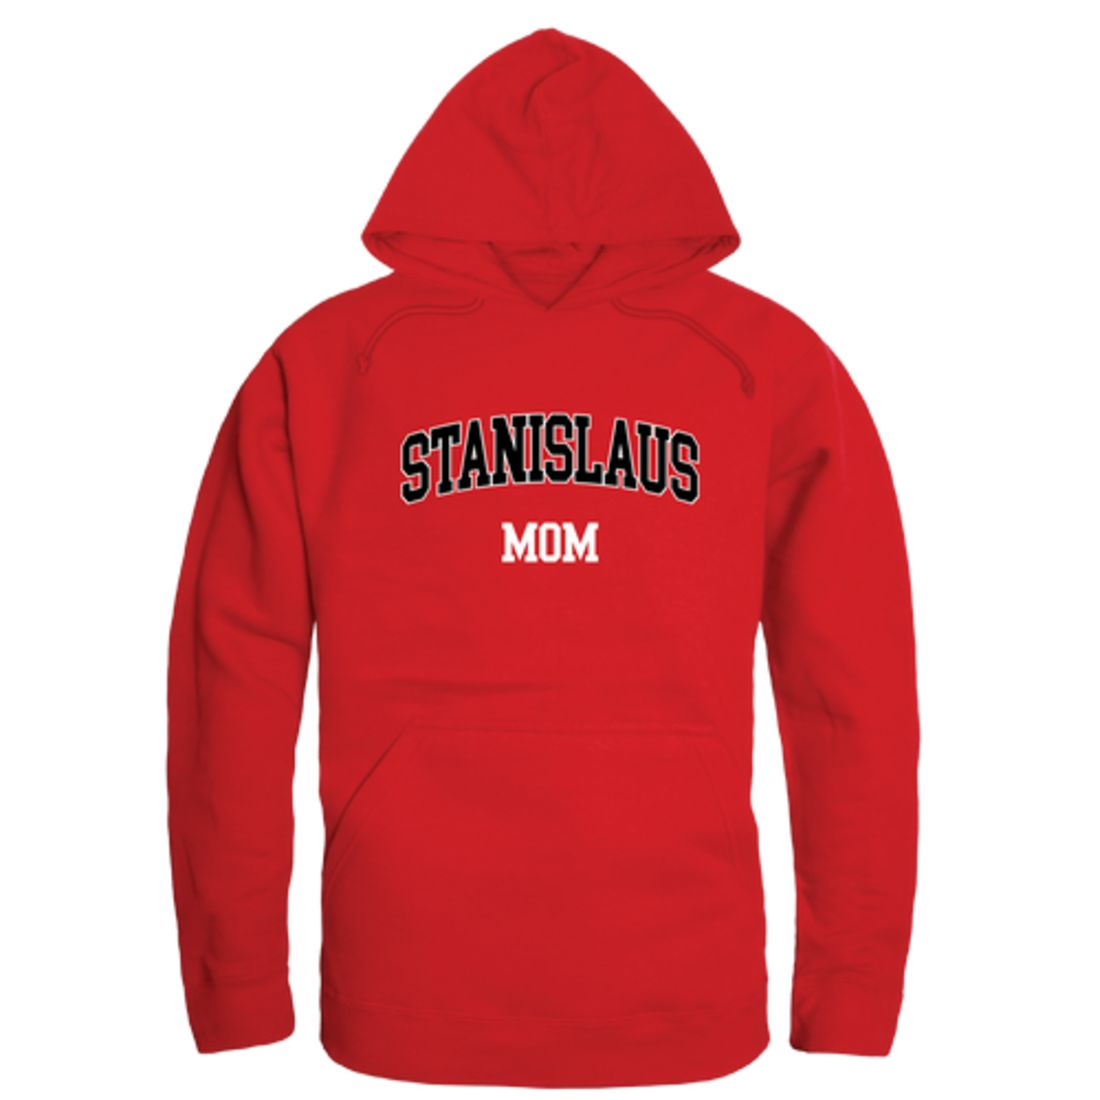 CSUSTAN California State University Stanislaus Warriors Mom Fleece Hoodie Sweatshirts Heather Grey-Campus-Wardrobe